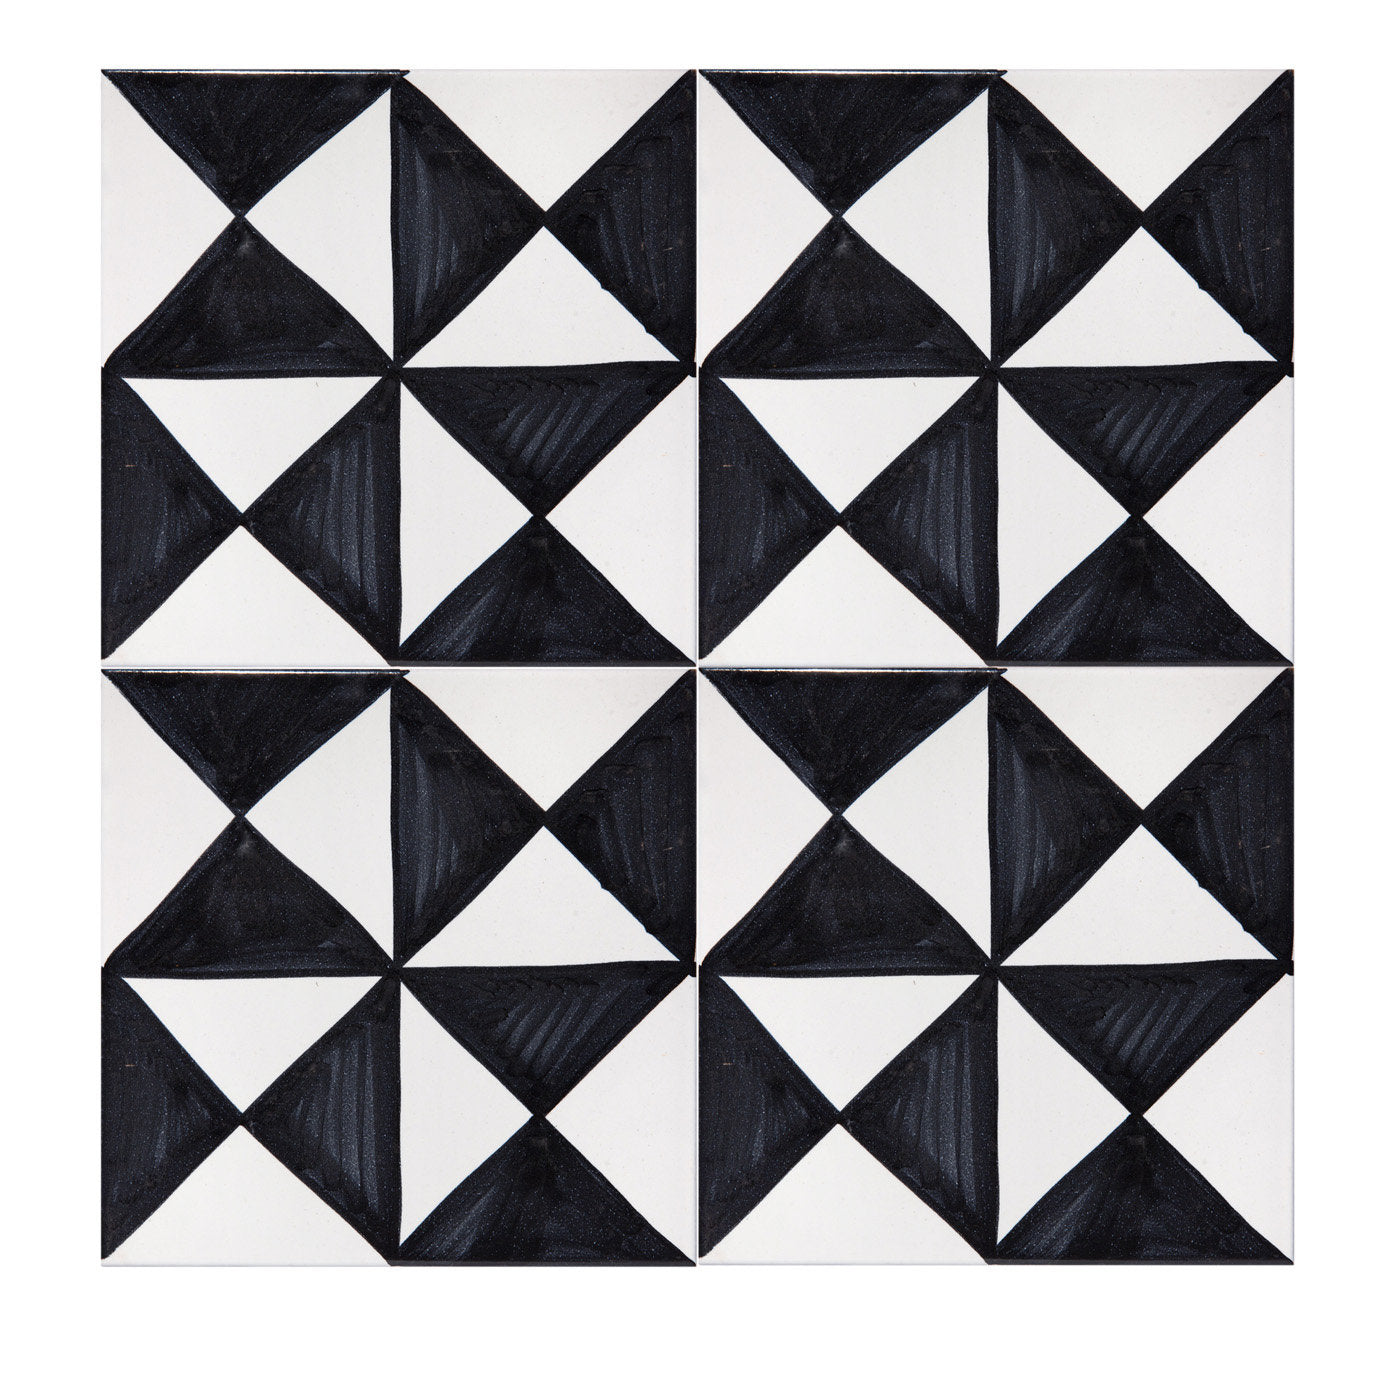 Set of 4 Riggiola Black Tiles - Main view